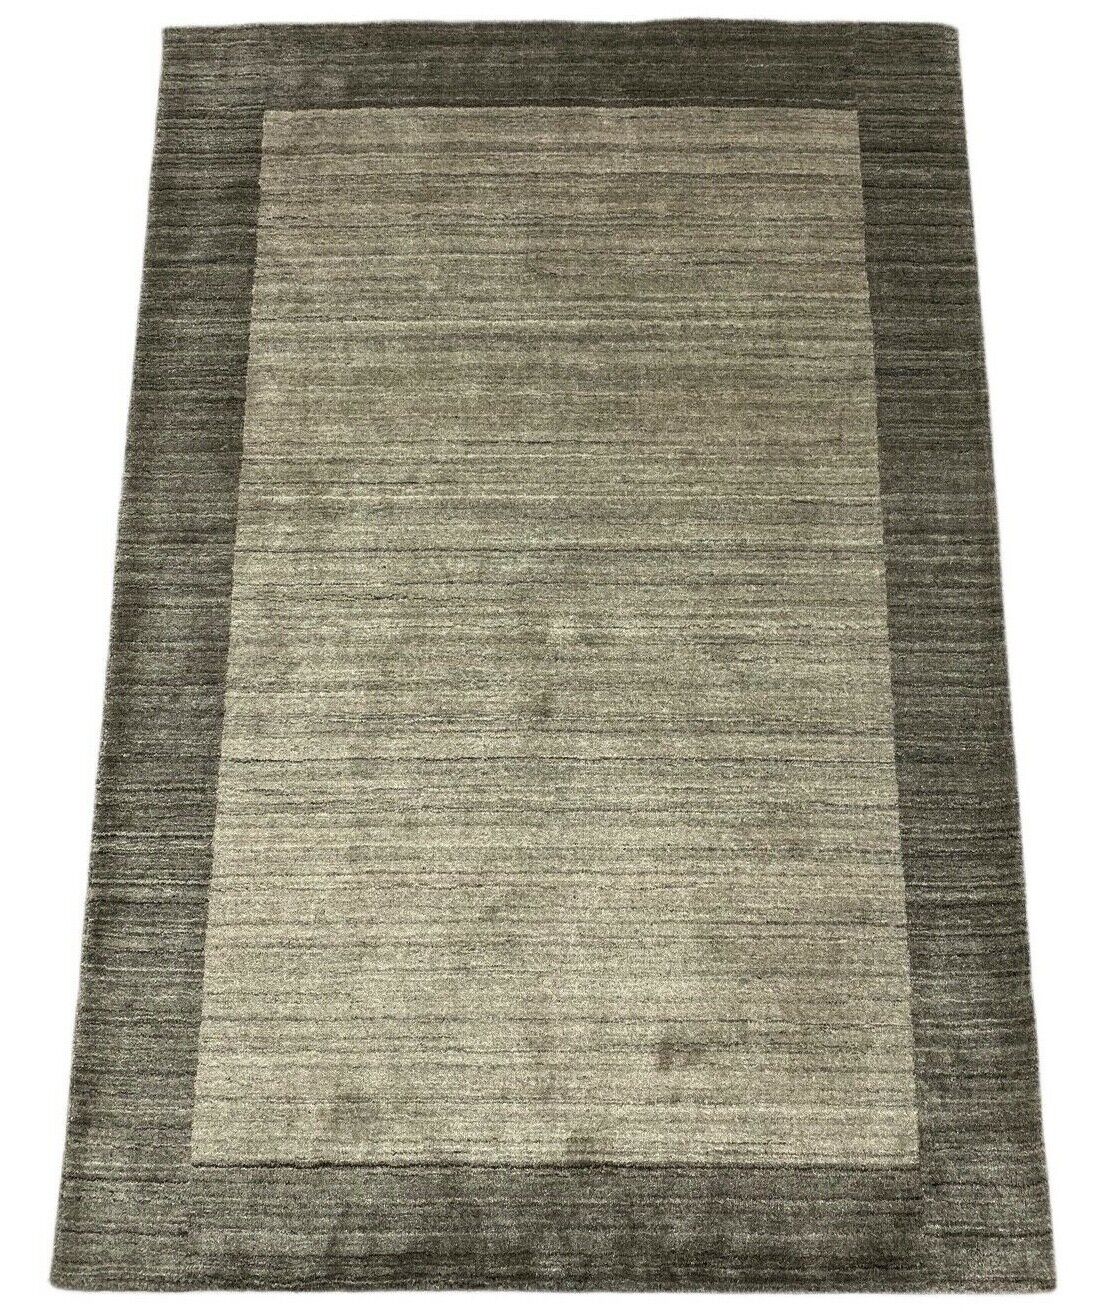 Gabbeh Teppich Wolle Grau lori Handgewebt 120x180 cm Viskose Debbich S9